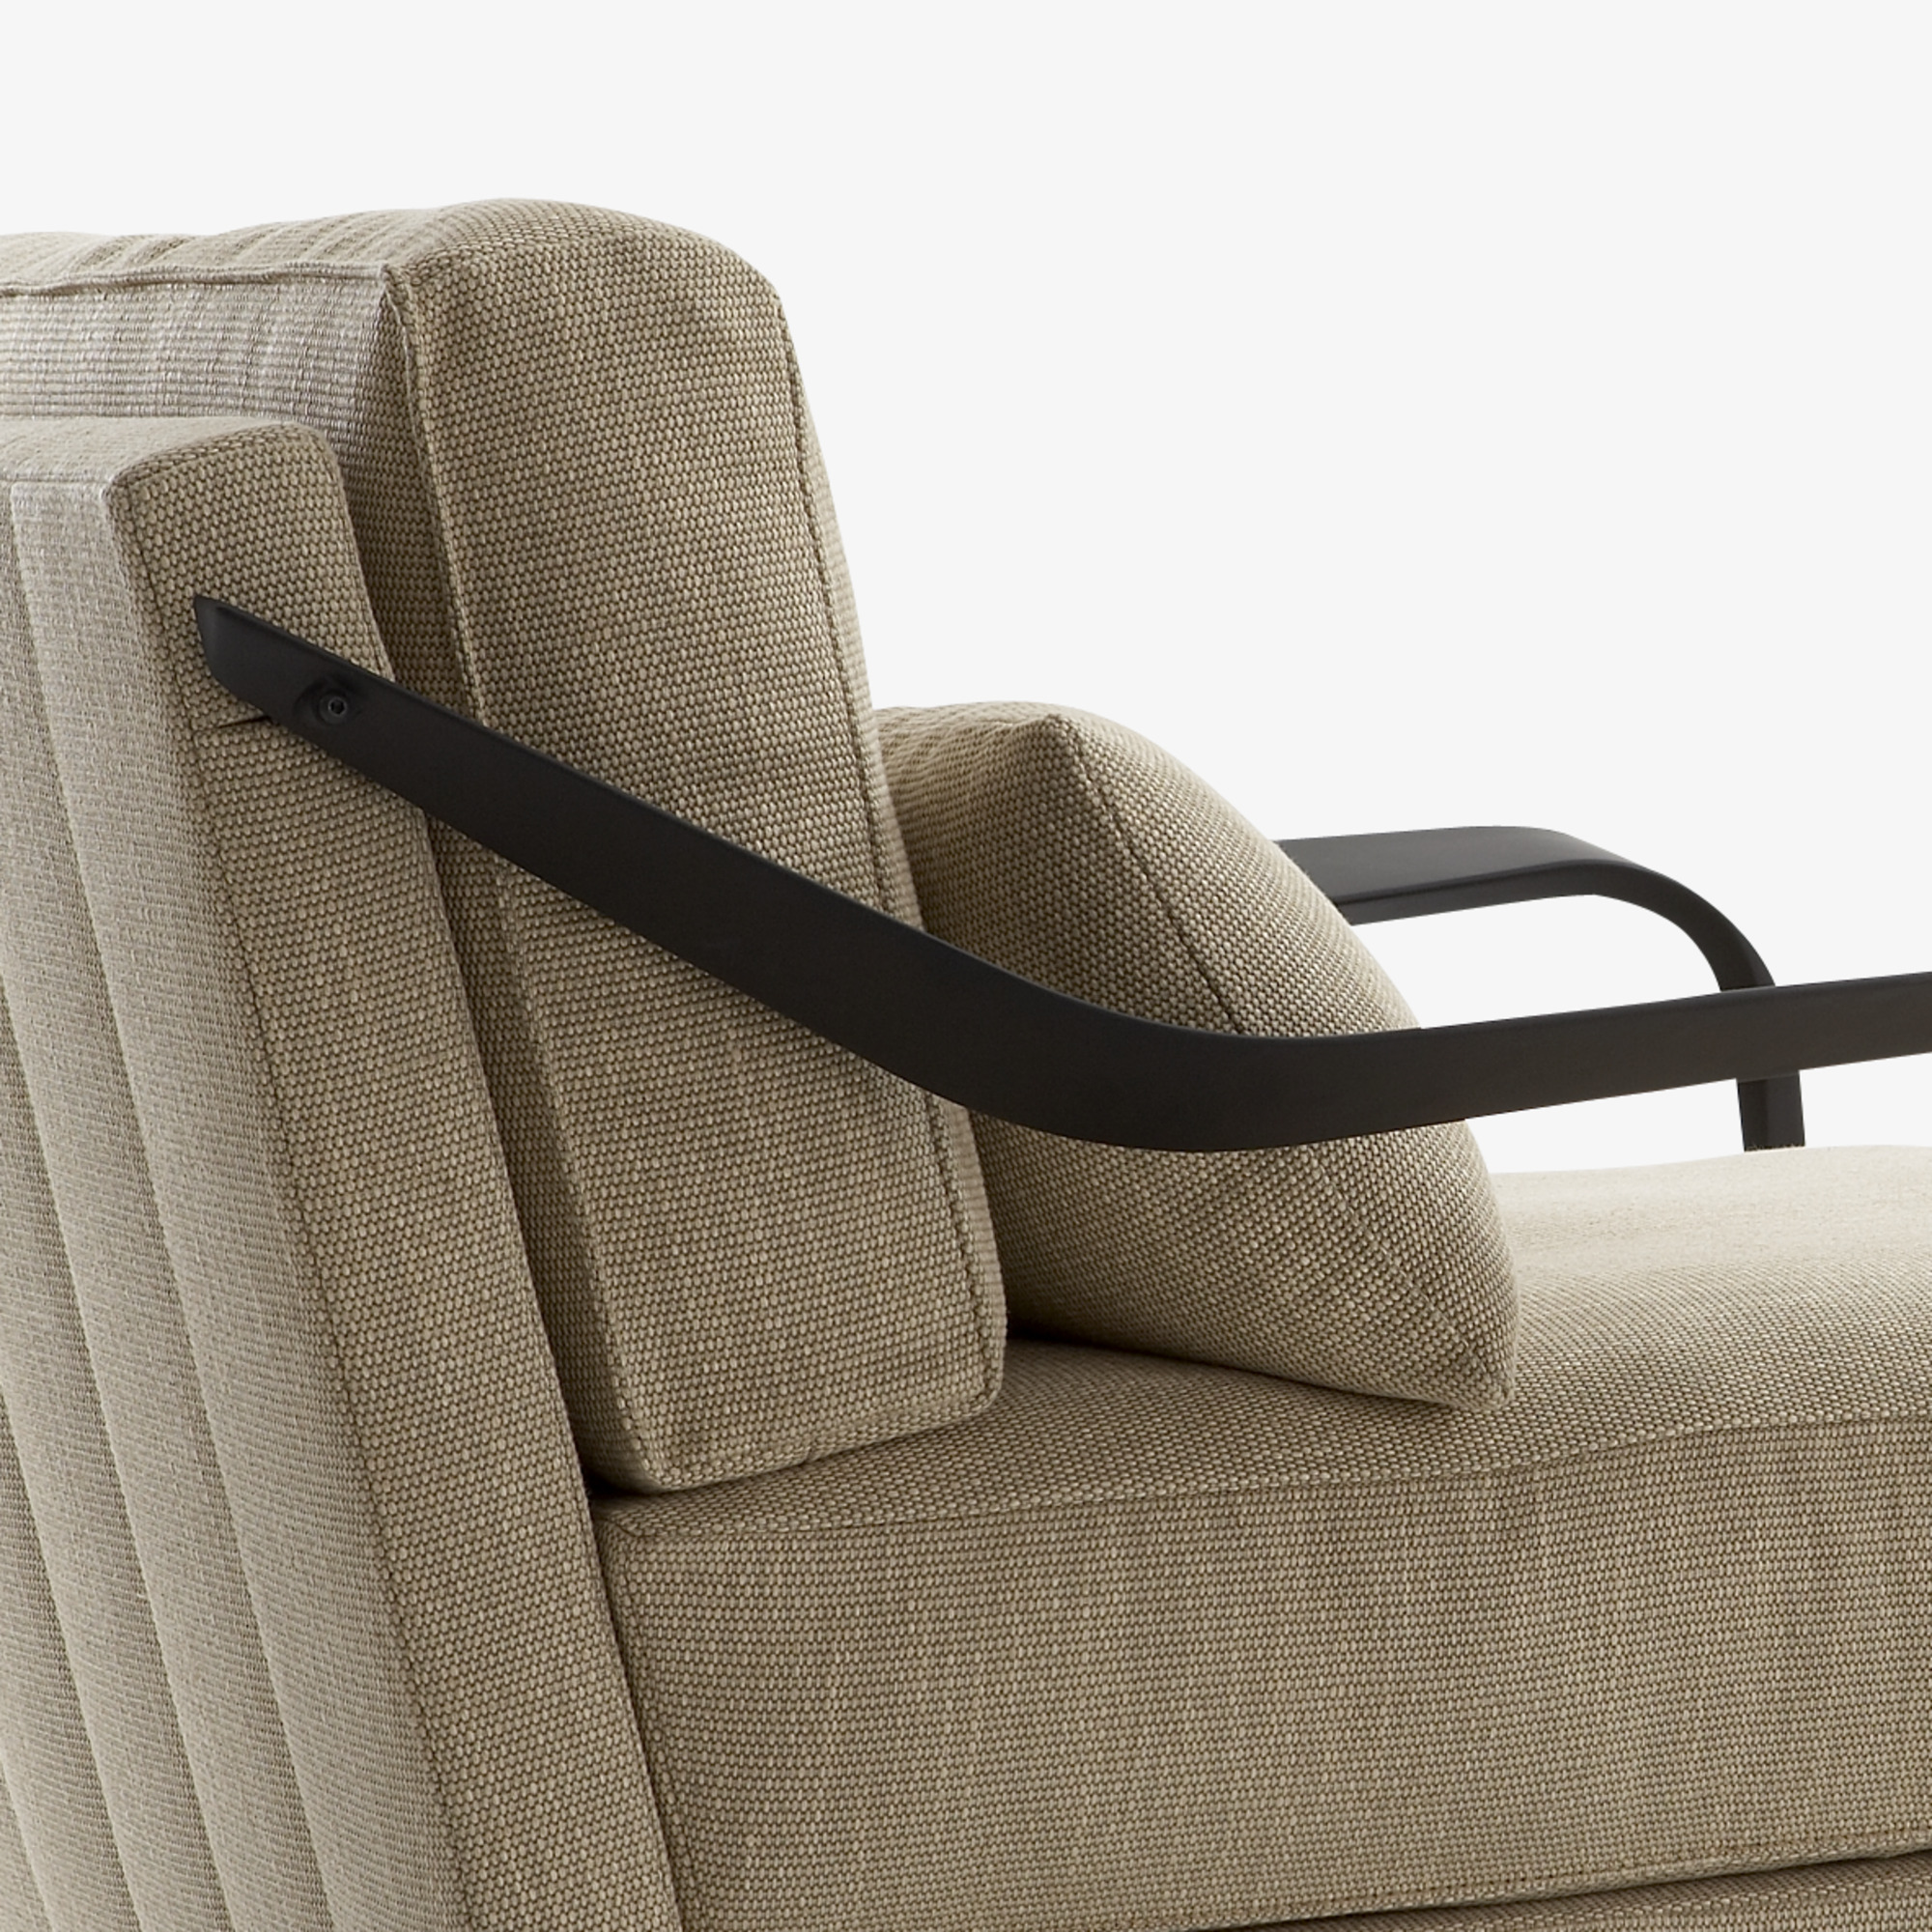 Image 扶手椅 铝制金属扶手 套件 5